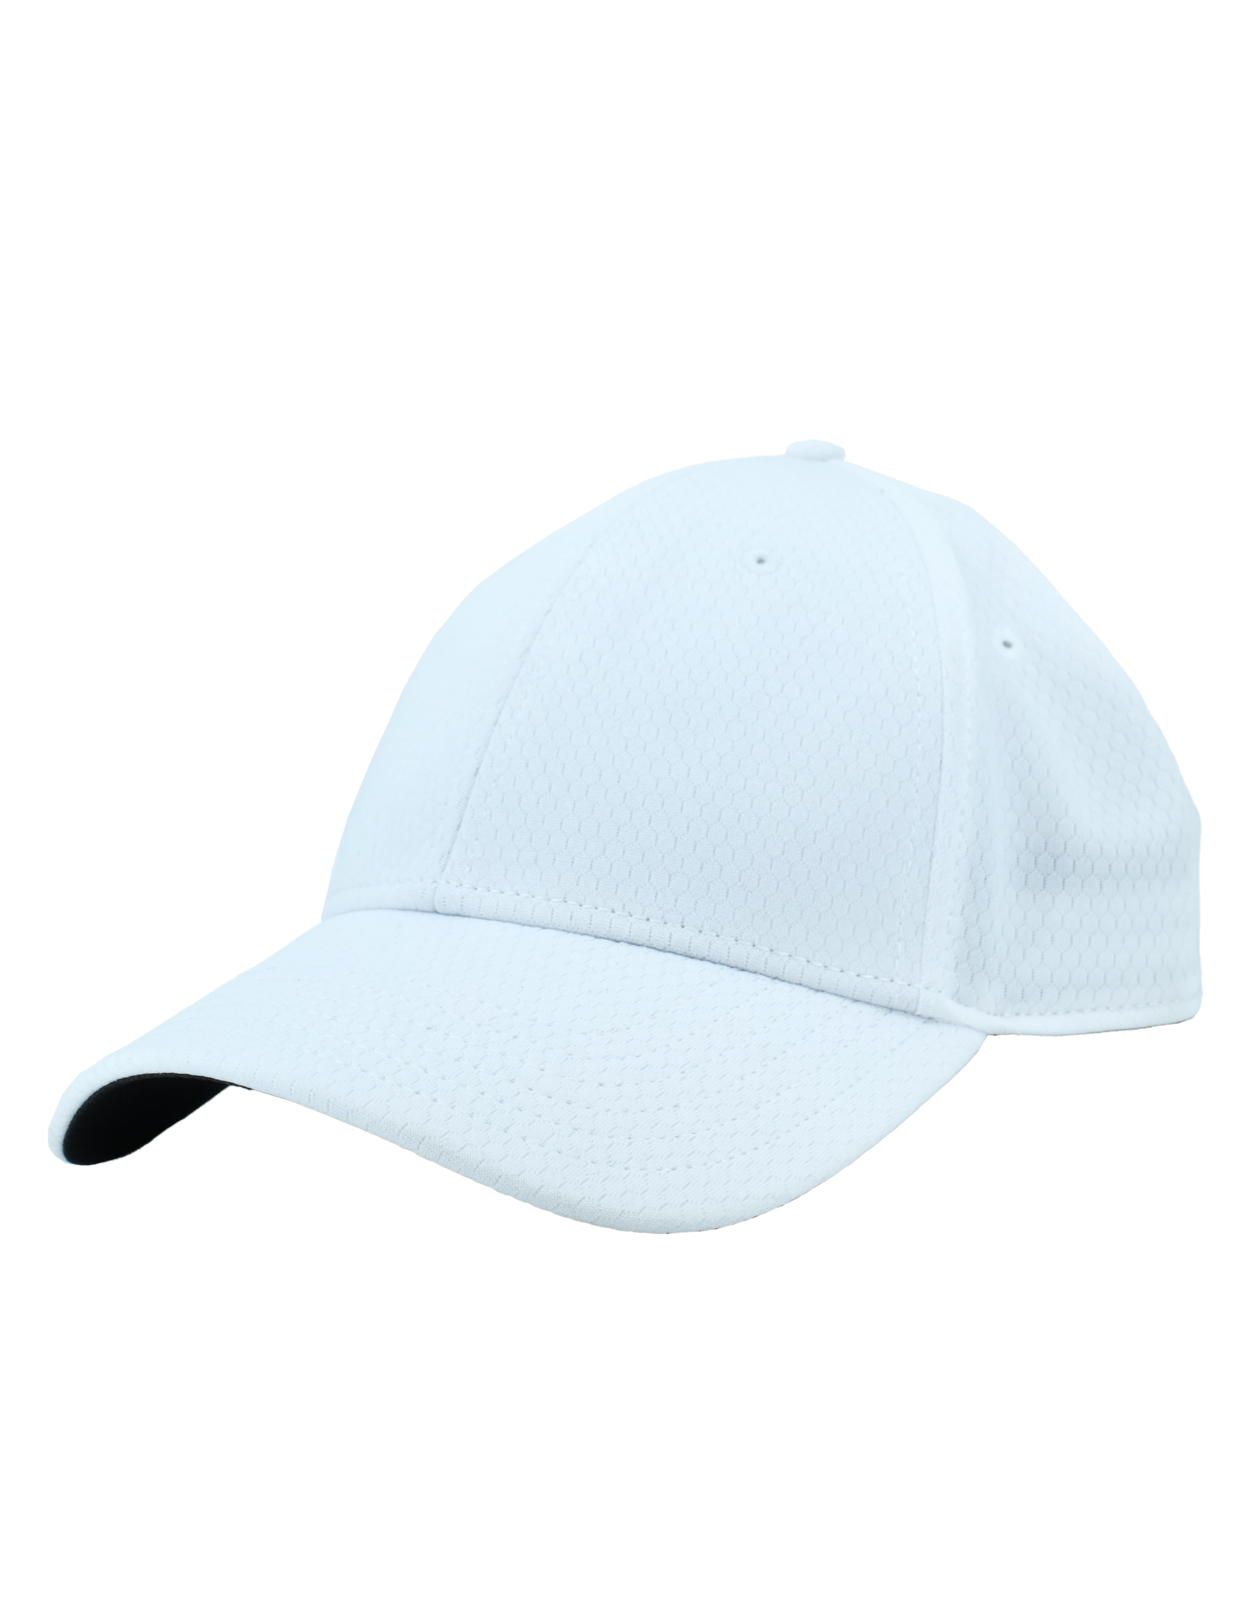 Callaway Golf Cap white